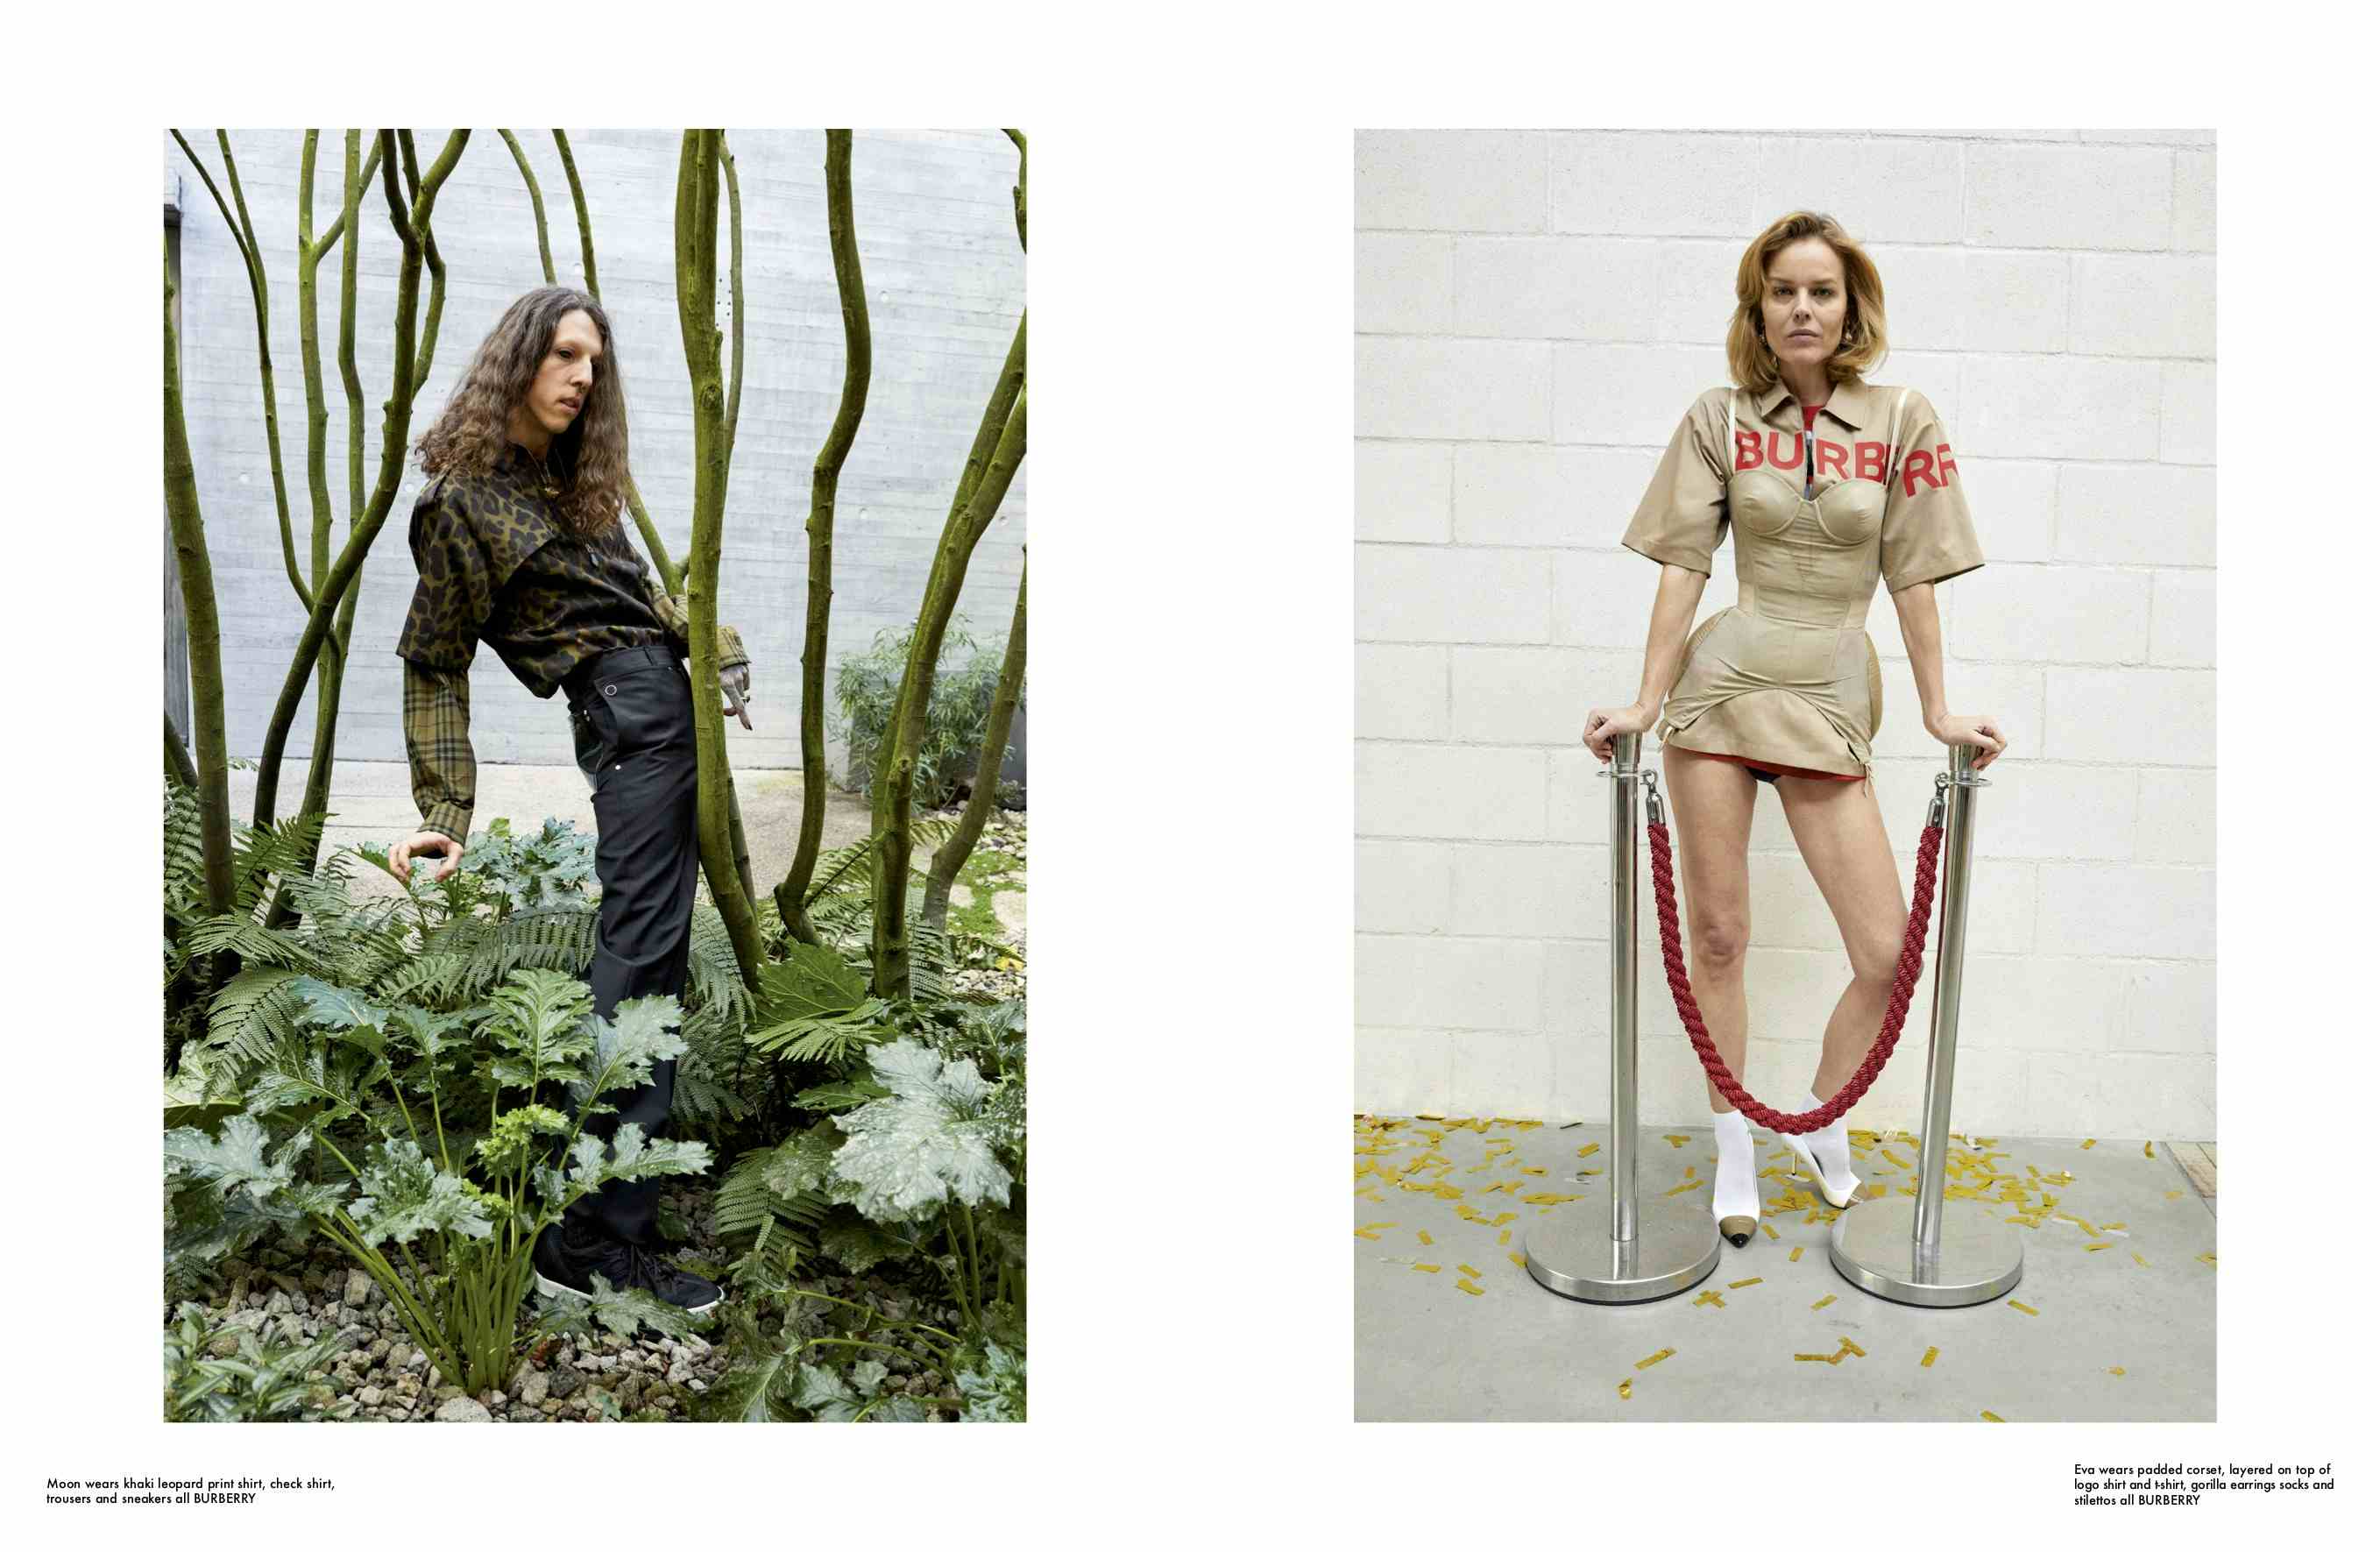 RE-EDITION - Burberry Special SS 2019
Photographer: Juergen Teller
Model: Eva Herzigová, Lily McMenamy, Riccardo Tisci, 
Location: London